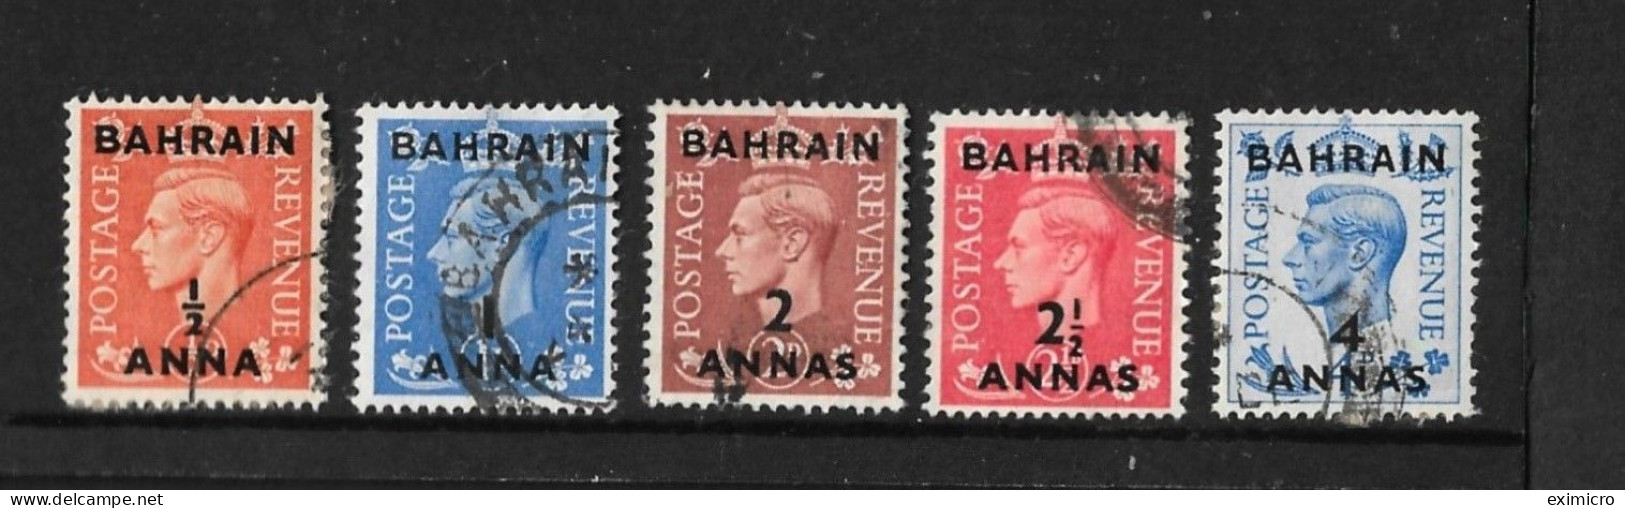 BAHRAIN 1950 - 1955 VALUES TO 4a On 4d SG 71,72,74,75,76 FINE USED Cat £30 - Bahrein (...-1965)